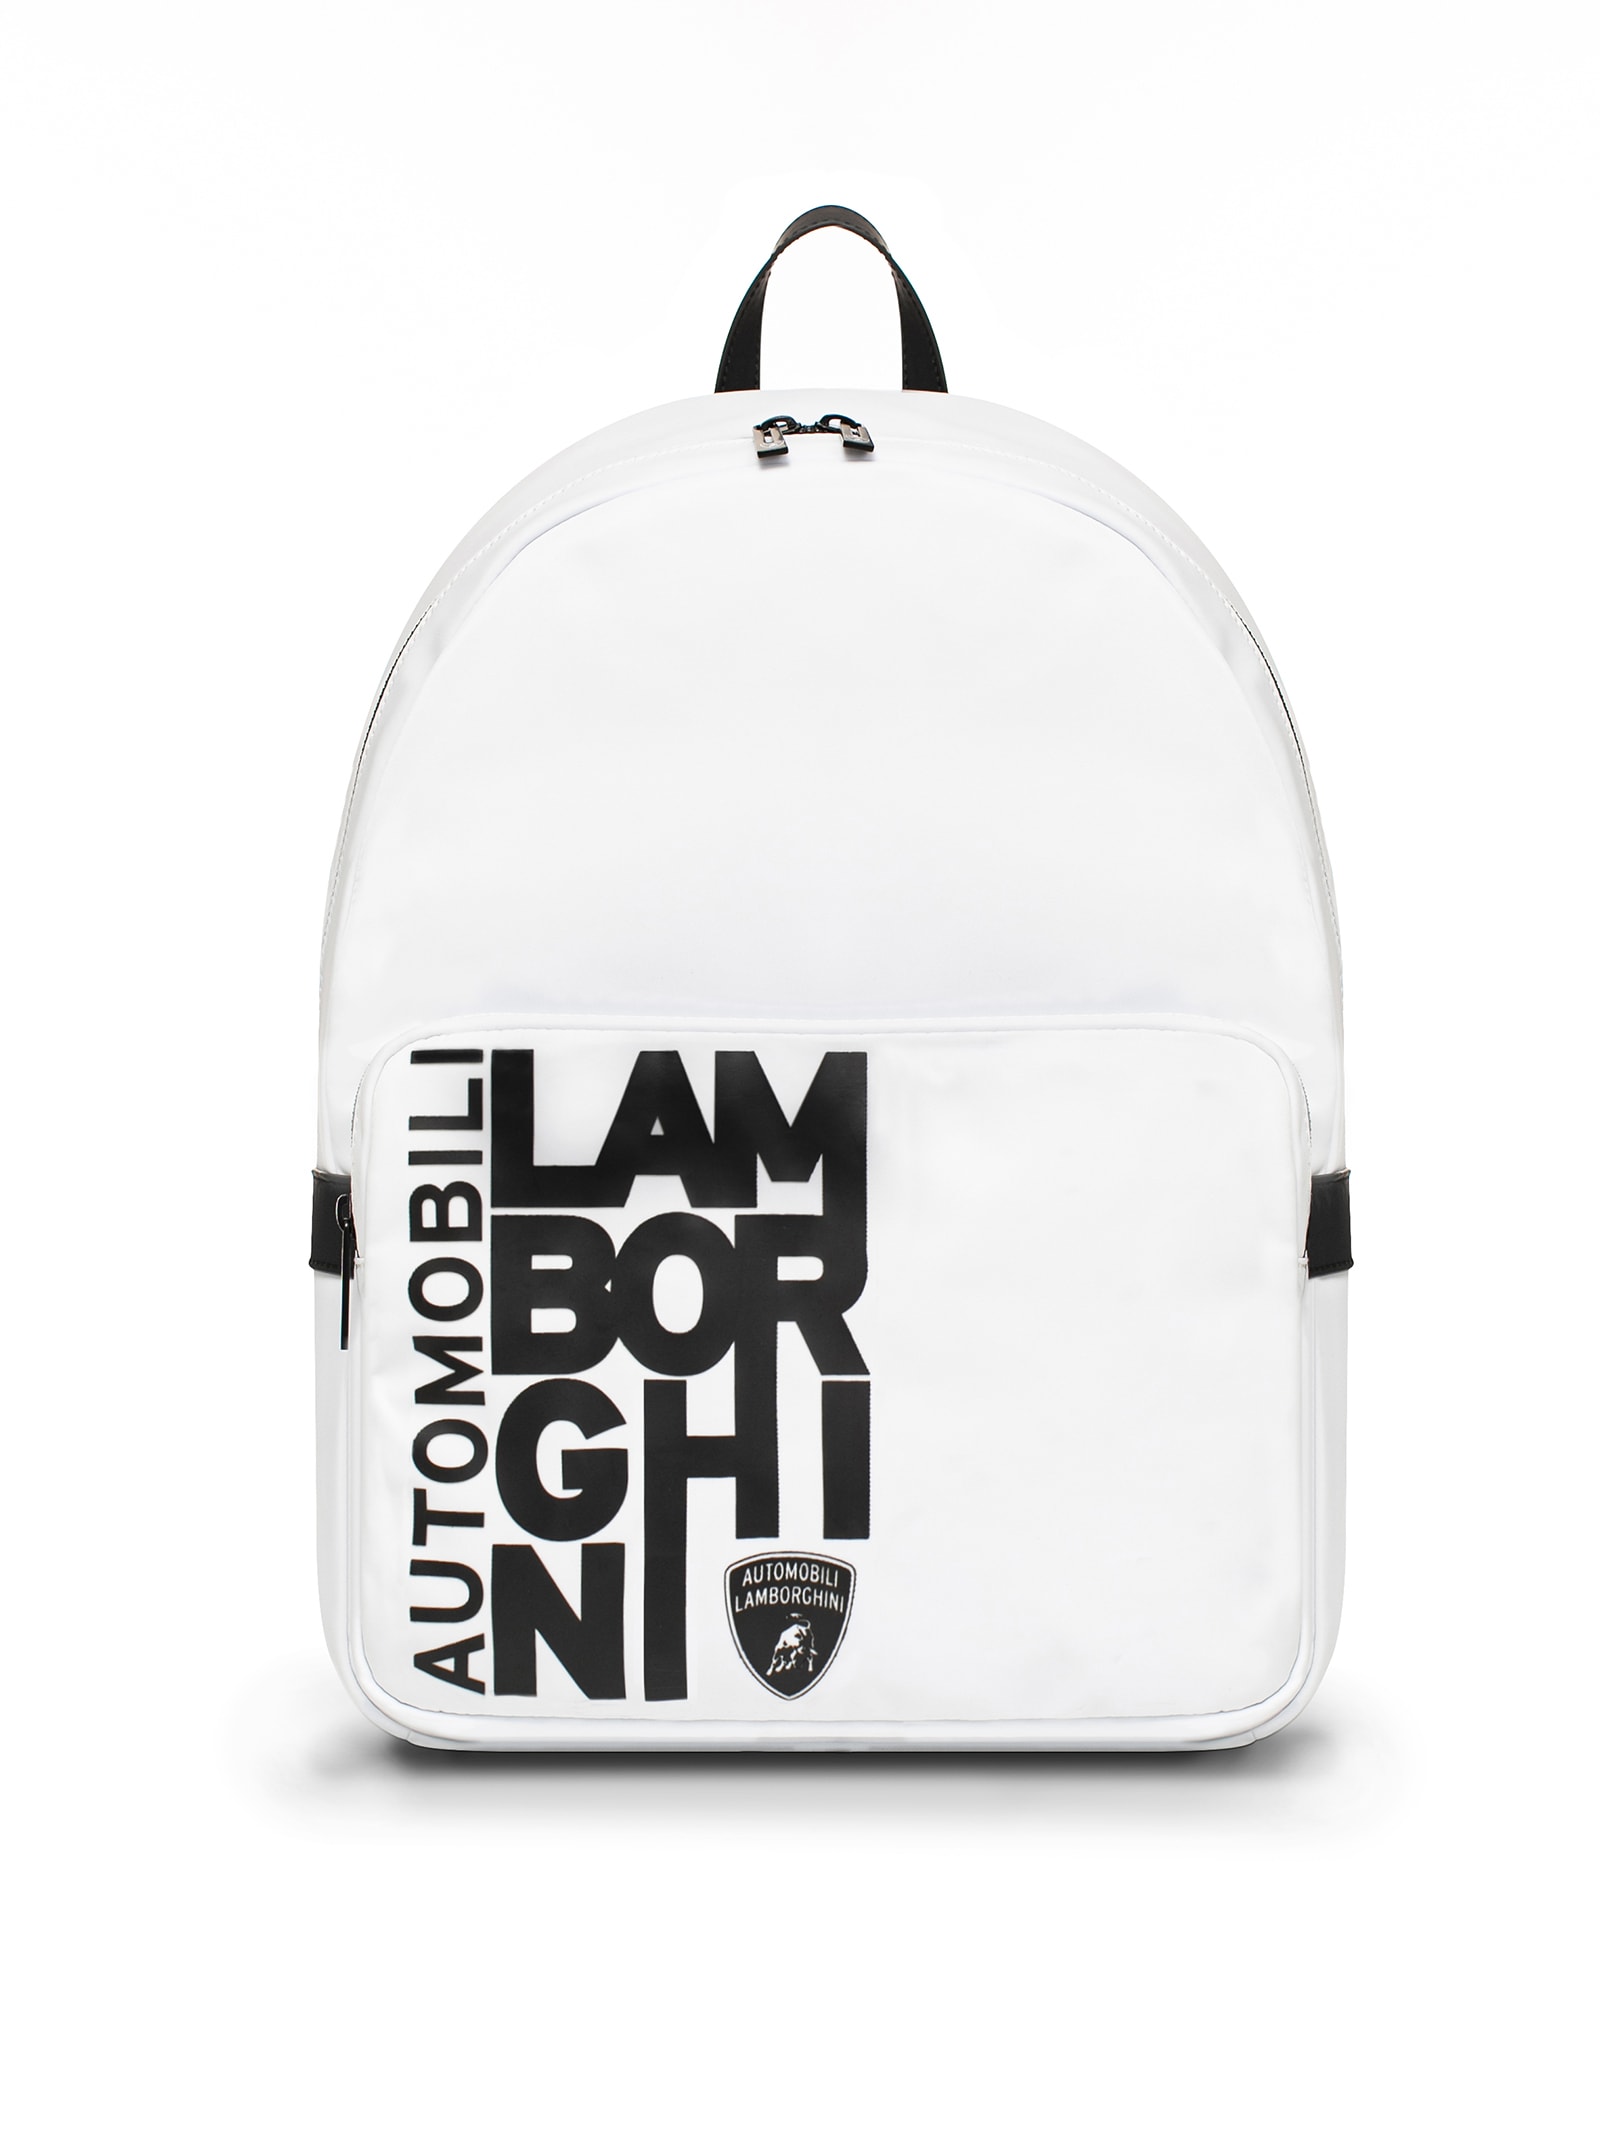 Automobili Lamborghini Backpack With Destructured Logo